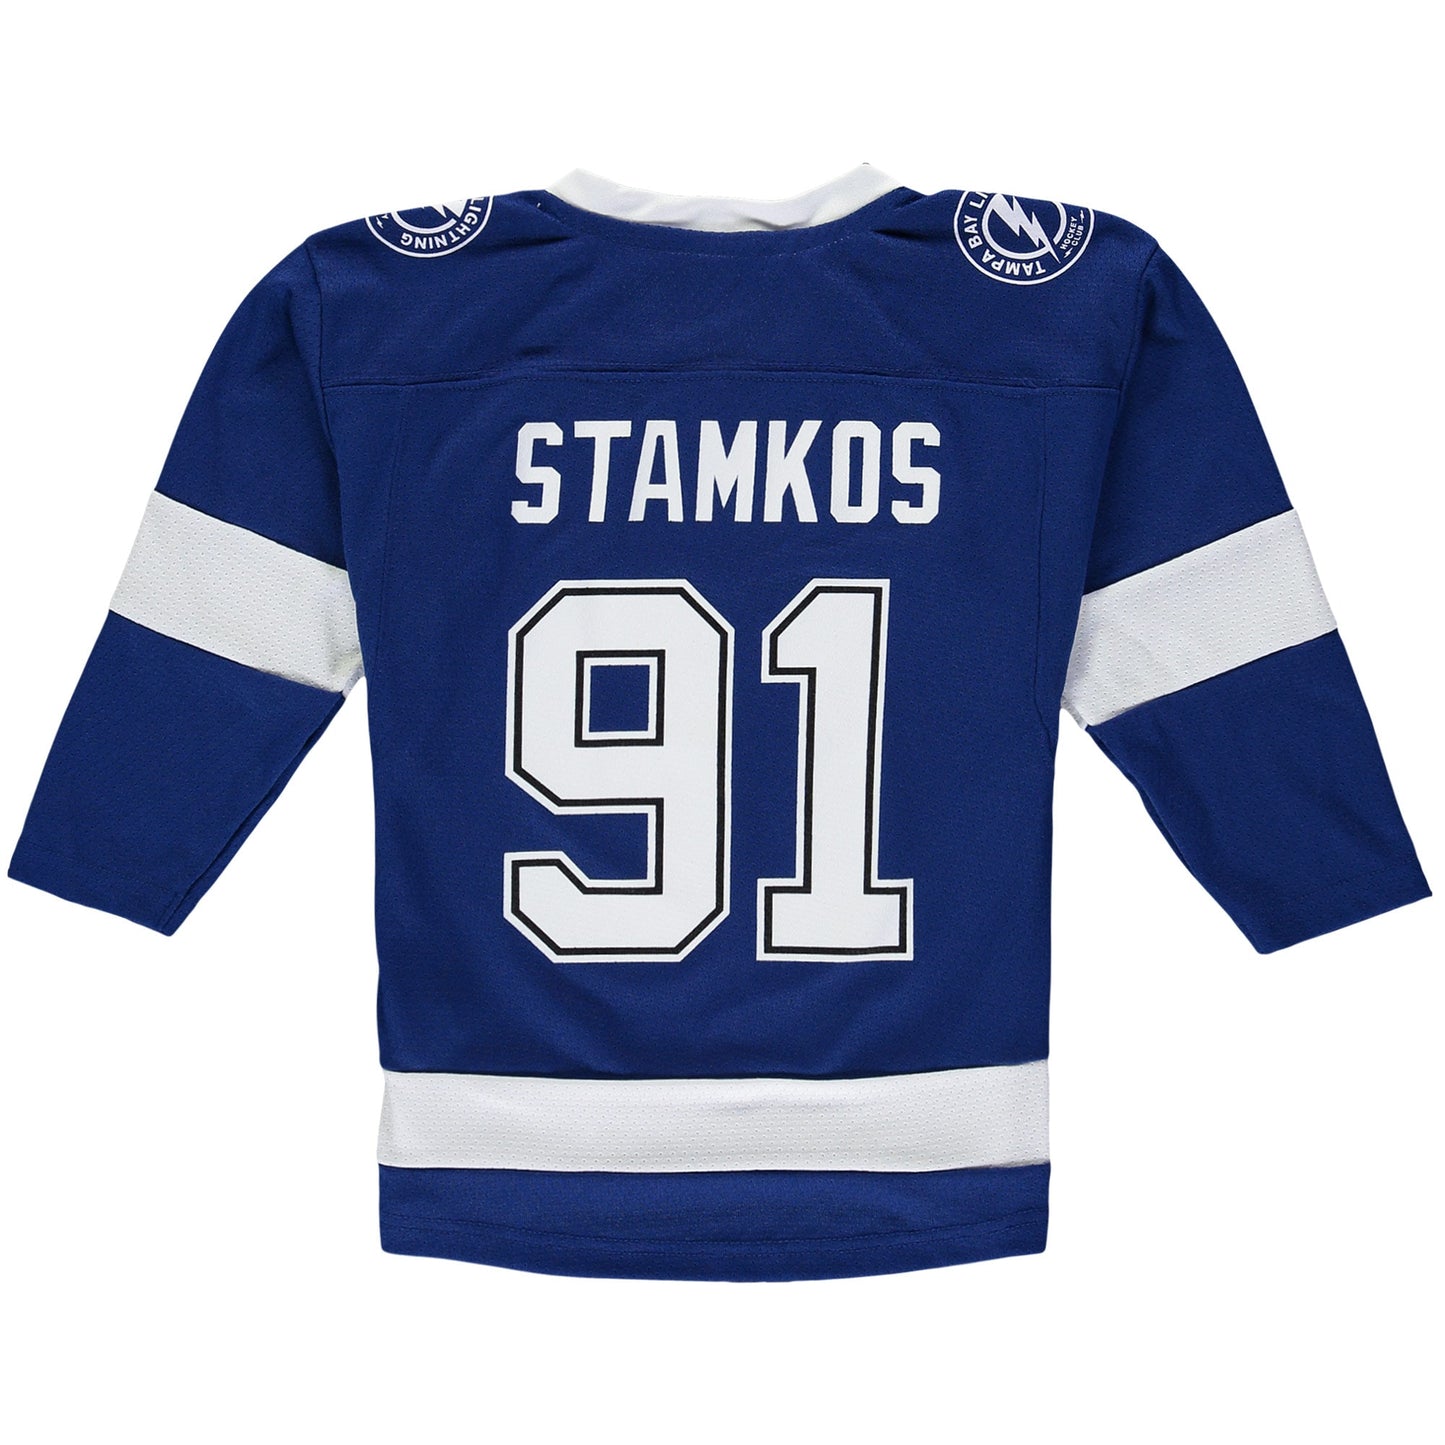 Steven Stamkos Tampa Bay Lightning Preschool Replica Player Jersey - Blue